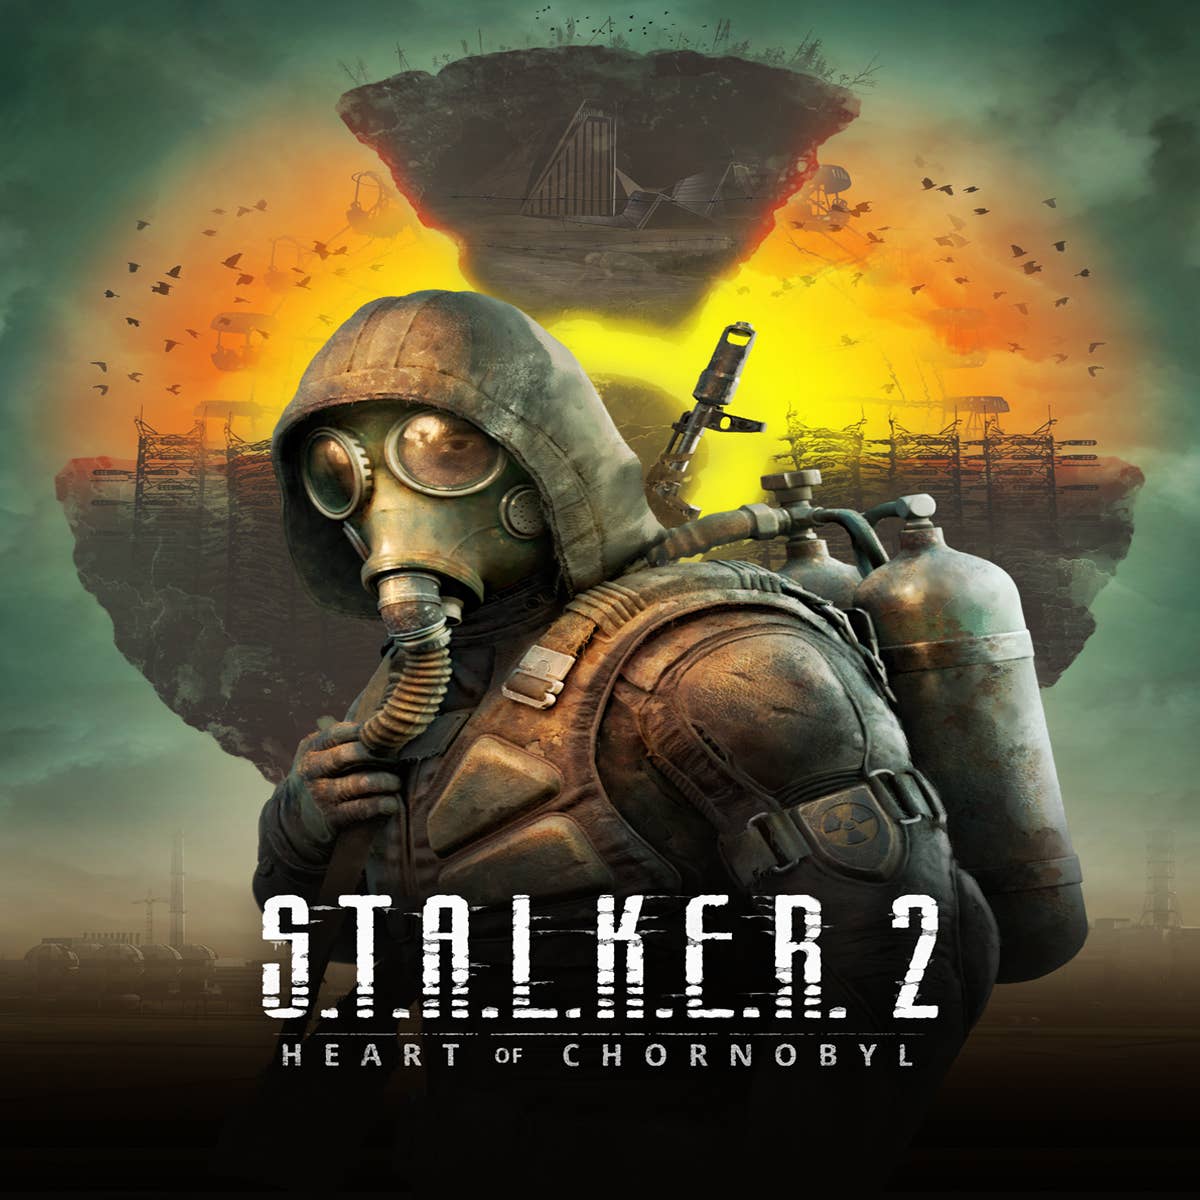 Stalker 2: Heart of Chornobyl gets a new trailer amid Ukraine war